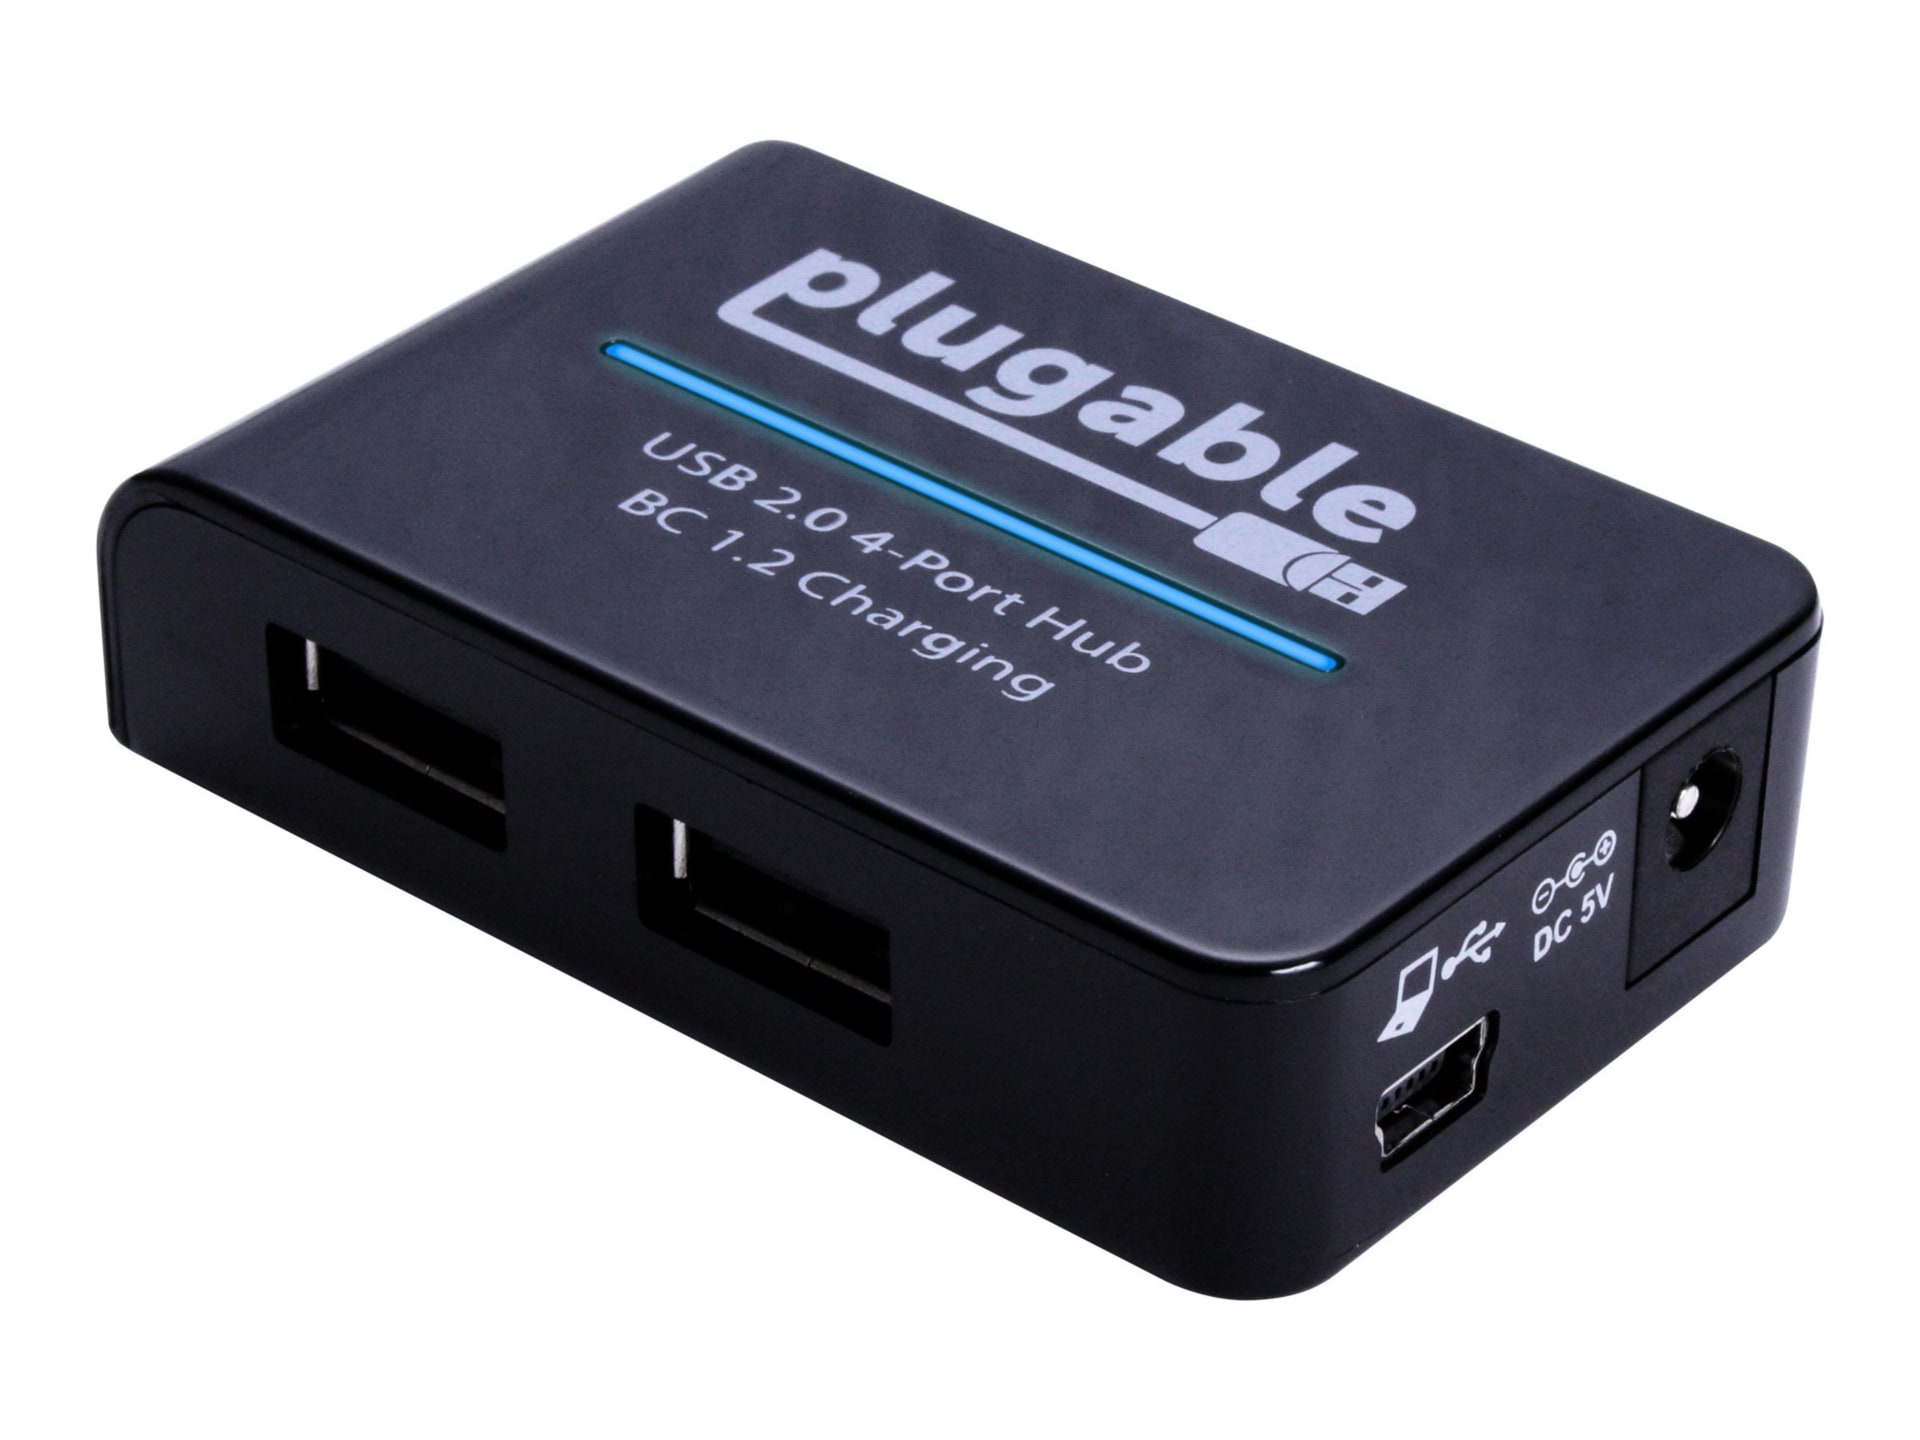 Plugable USB 2.0 4-Port High Speed Hub